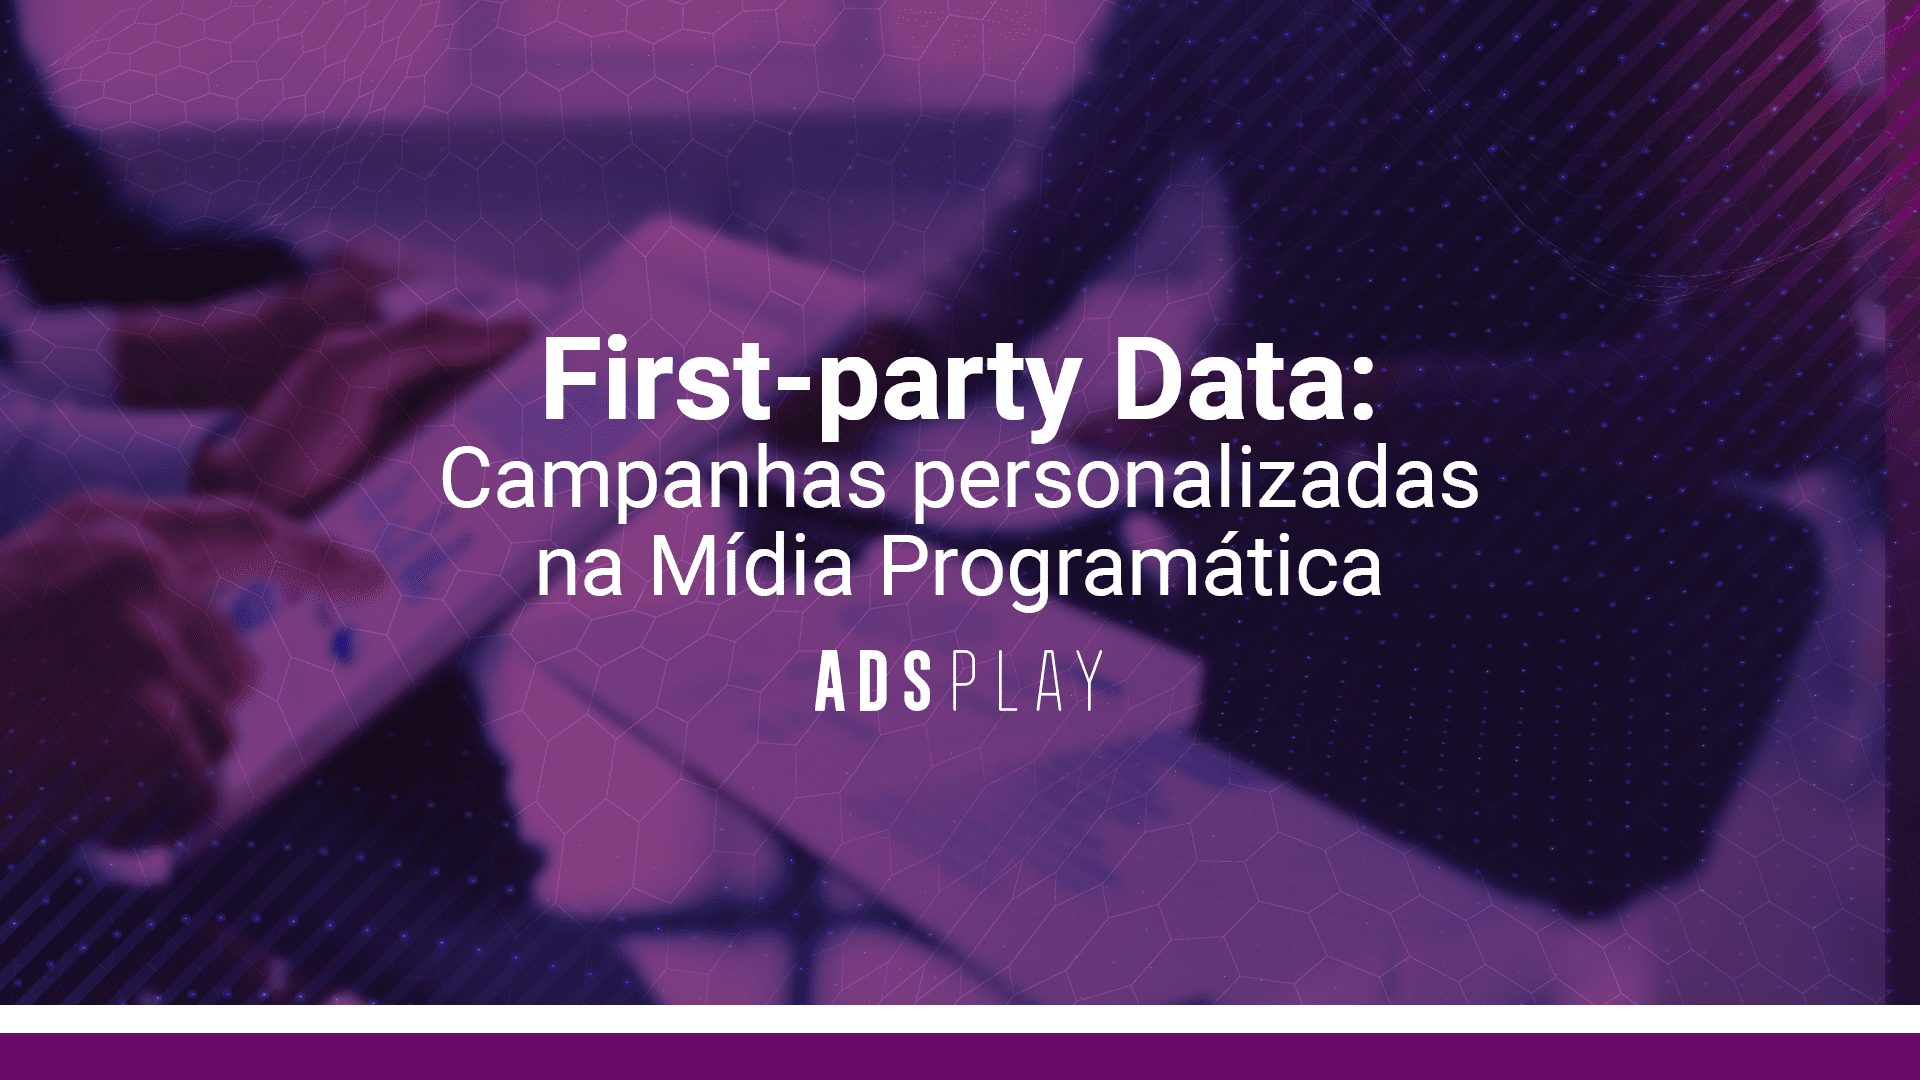 First-party data: campanhas personalizadas na mídia programática